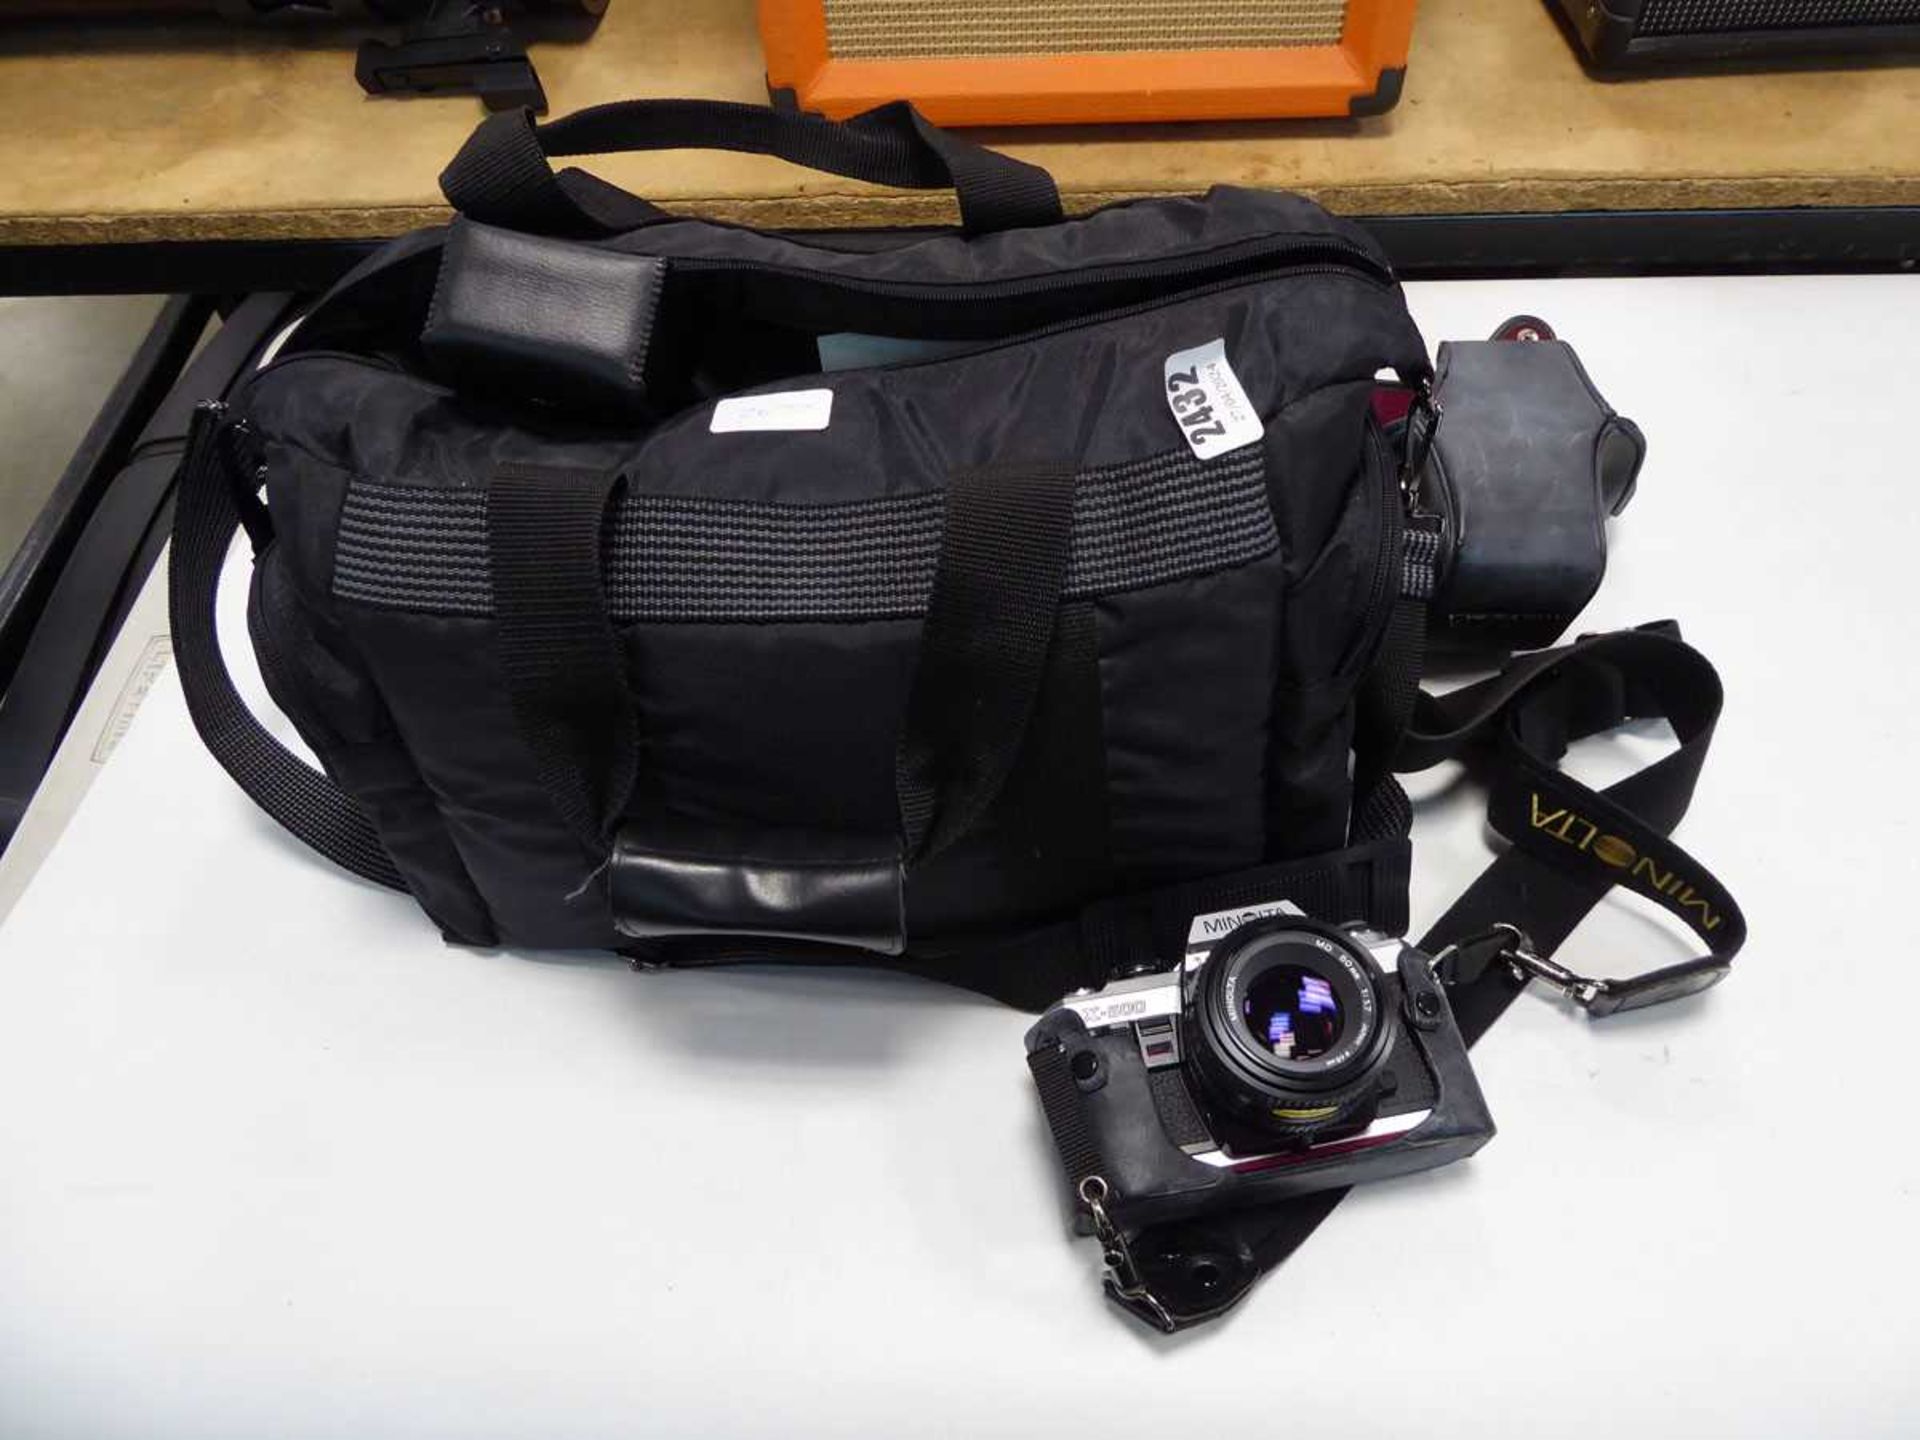 Minolta X500 camera with accessories and camera bag